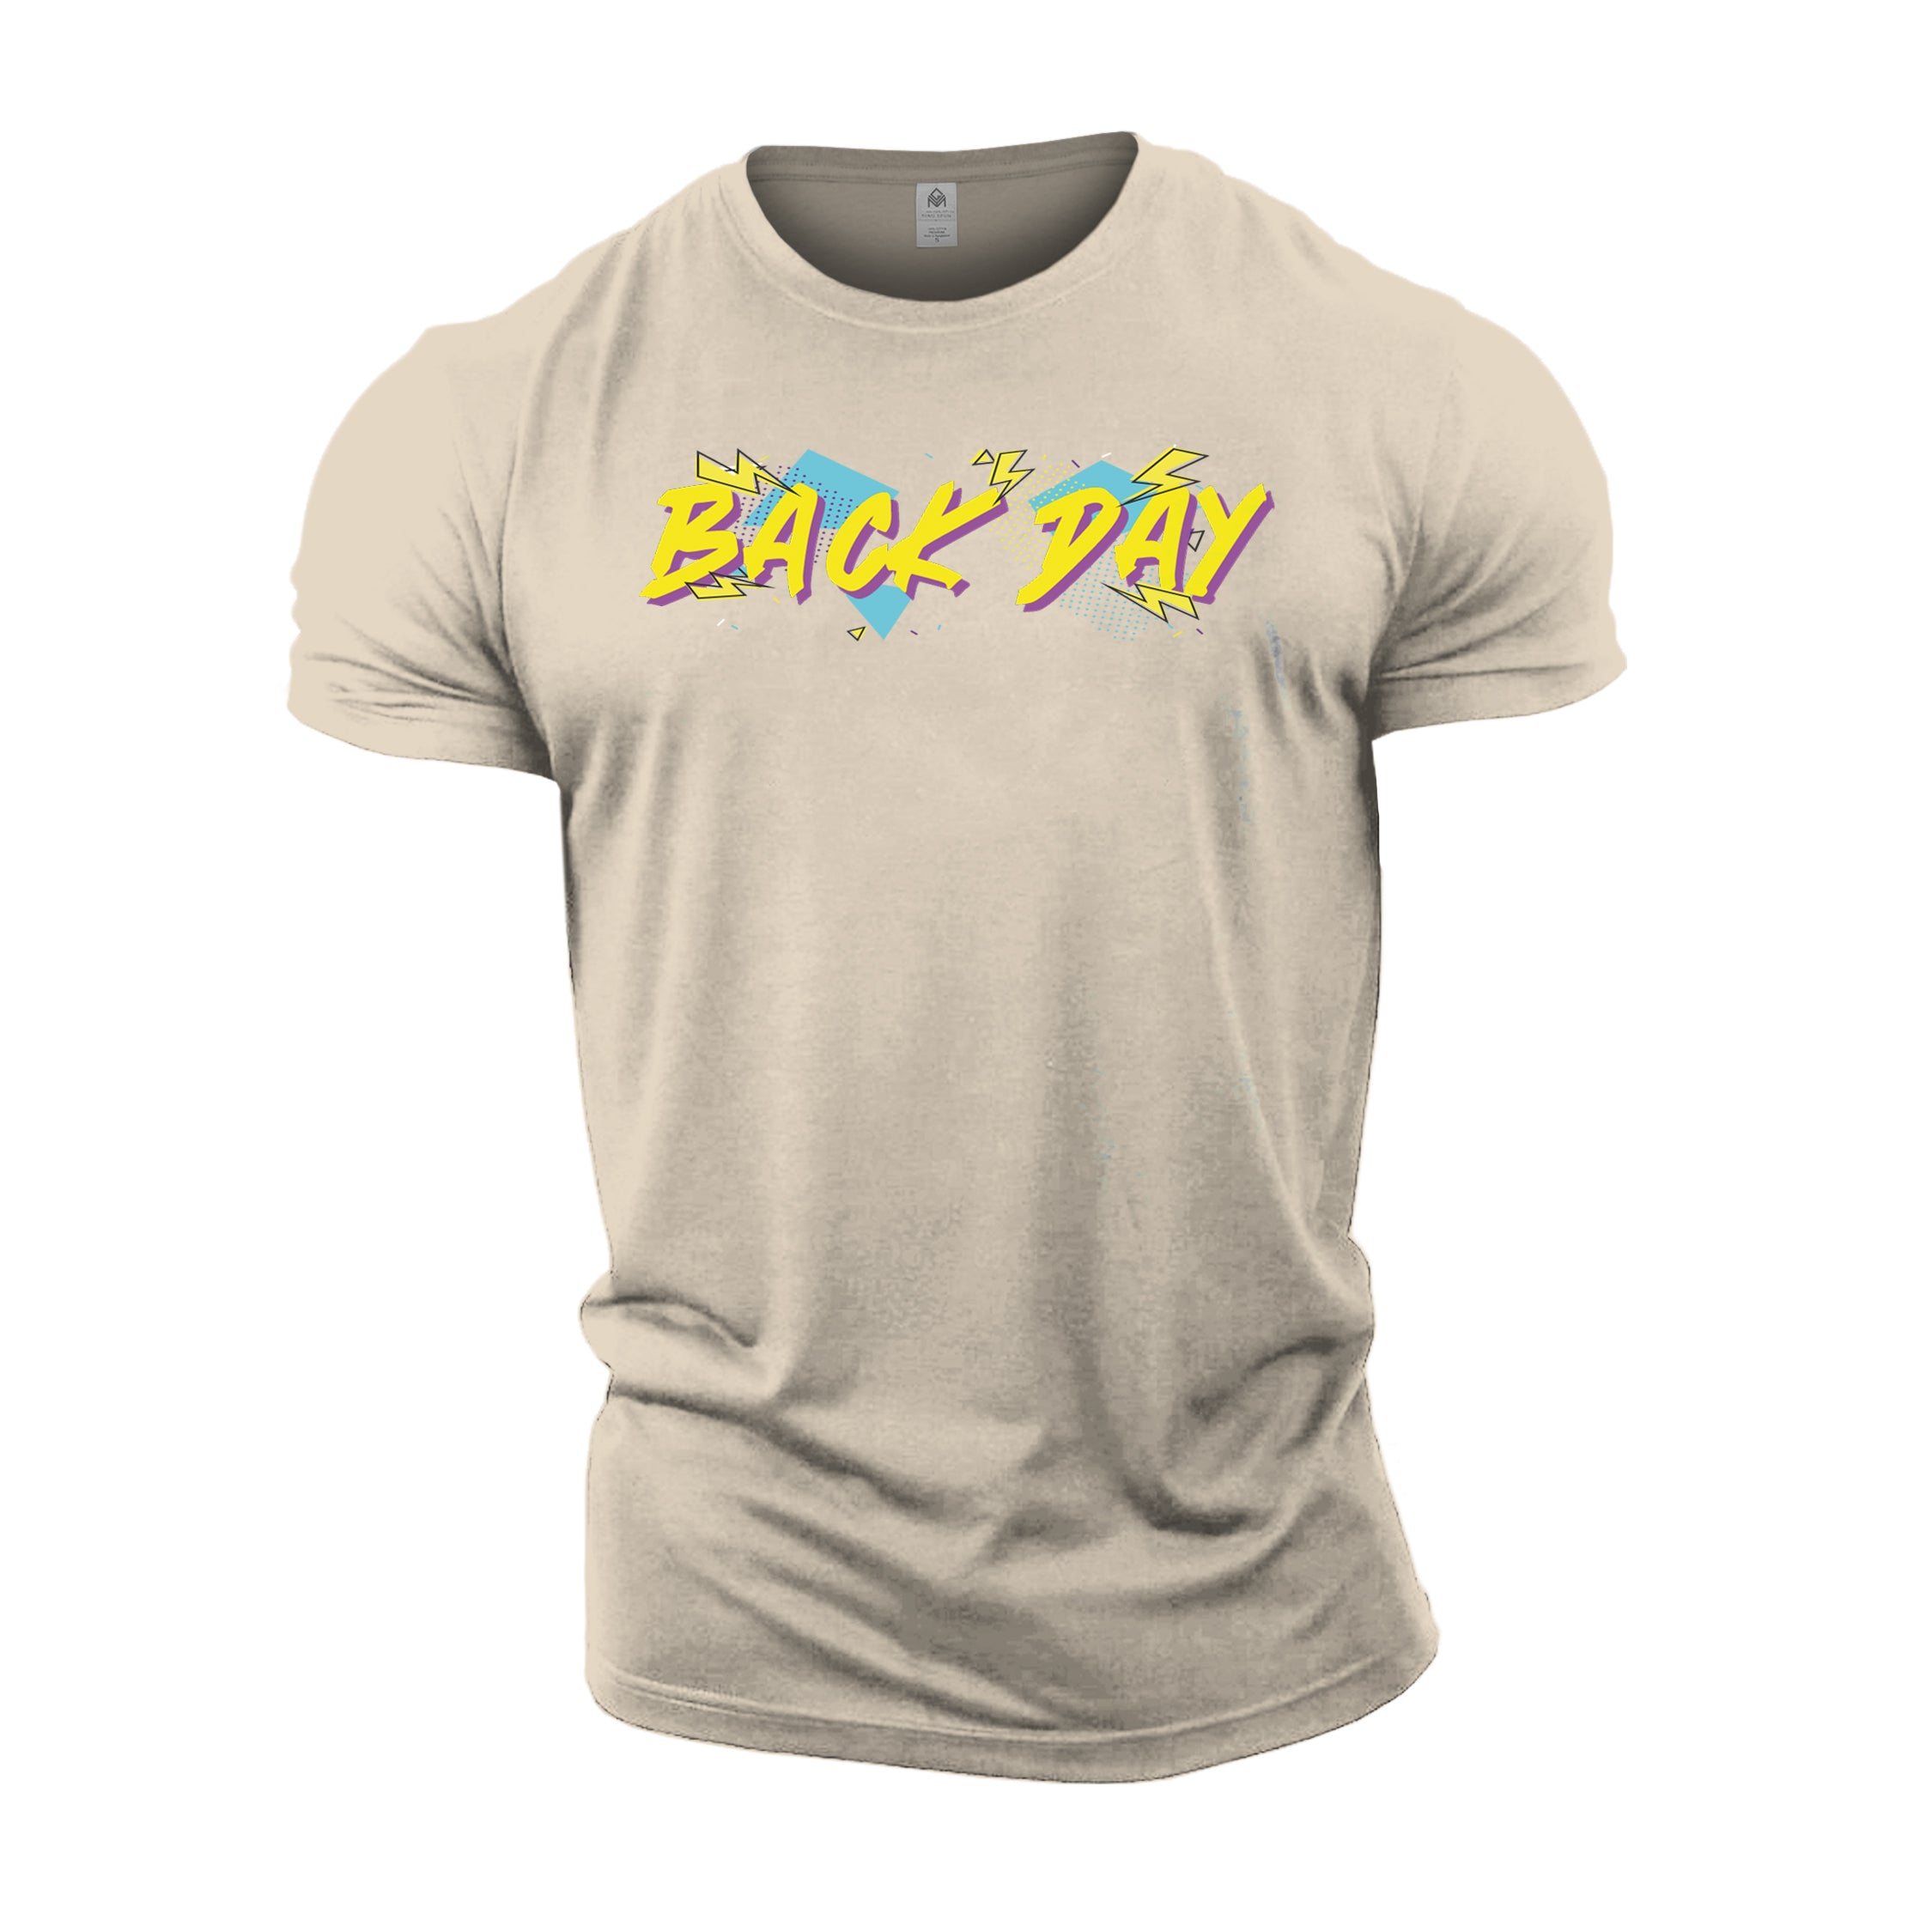 Retro Back Day - Gym T-Shirt